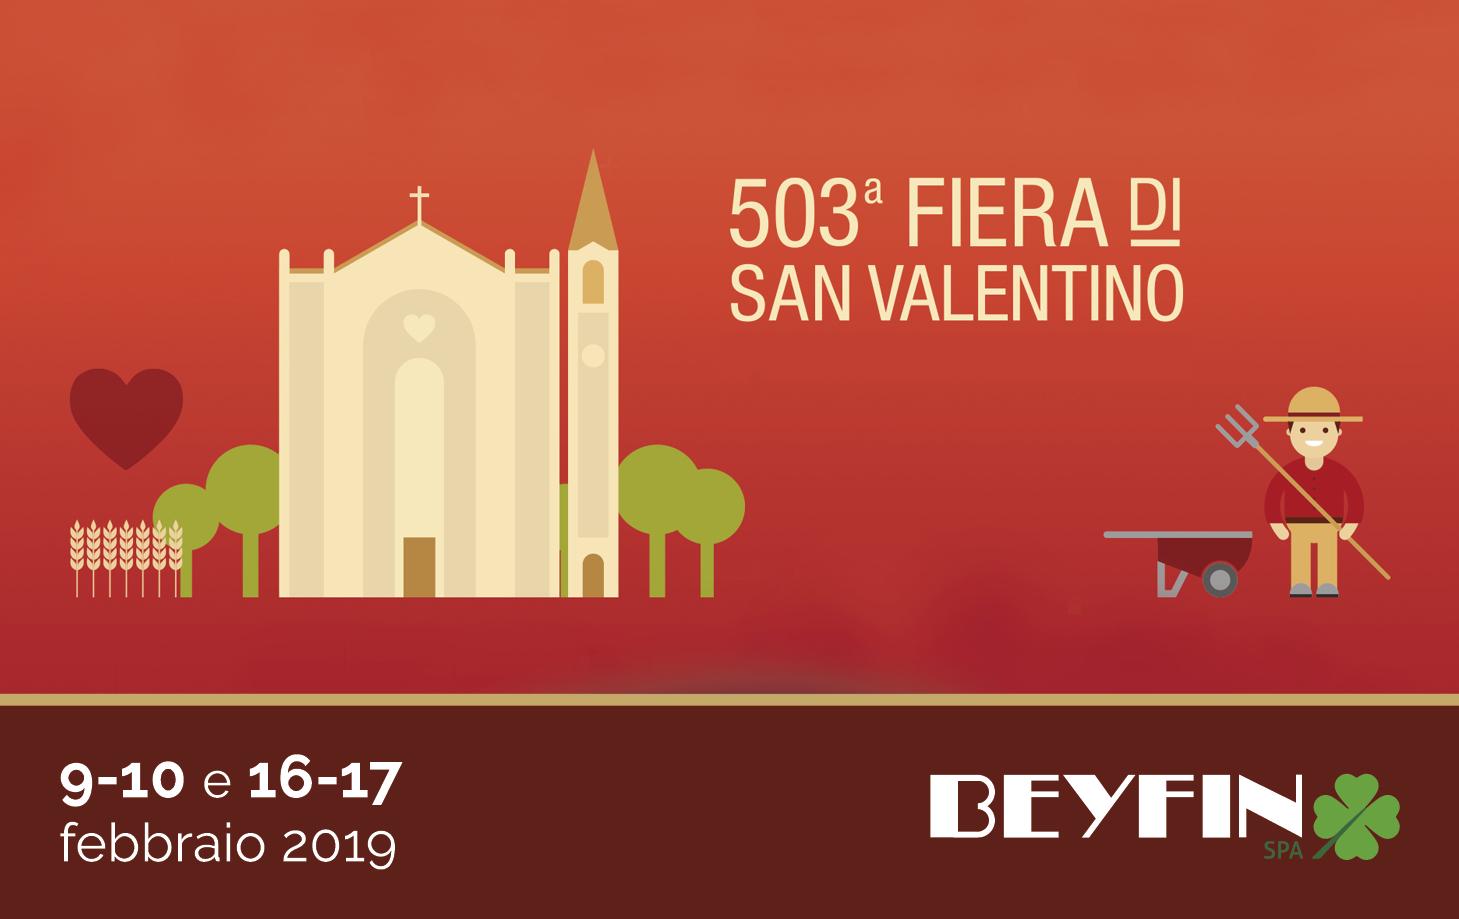 Beyfin - 503° fiera di San Valentino